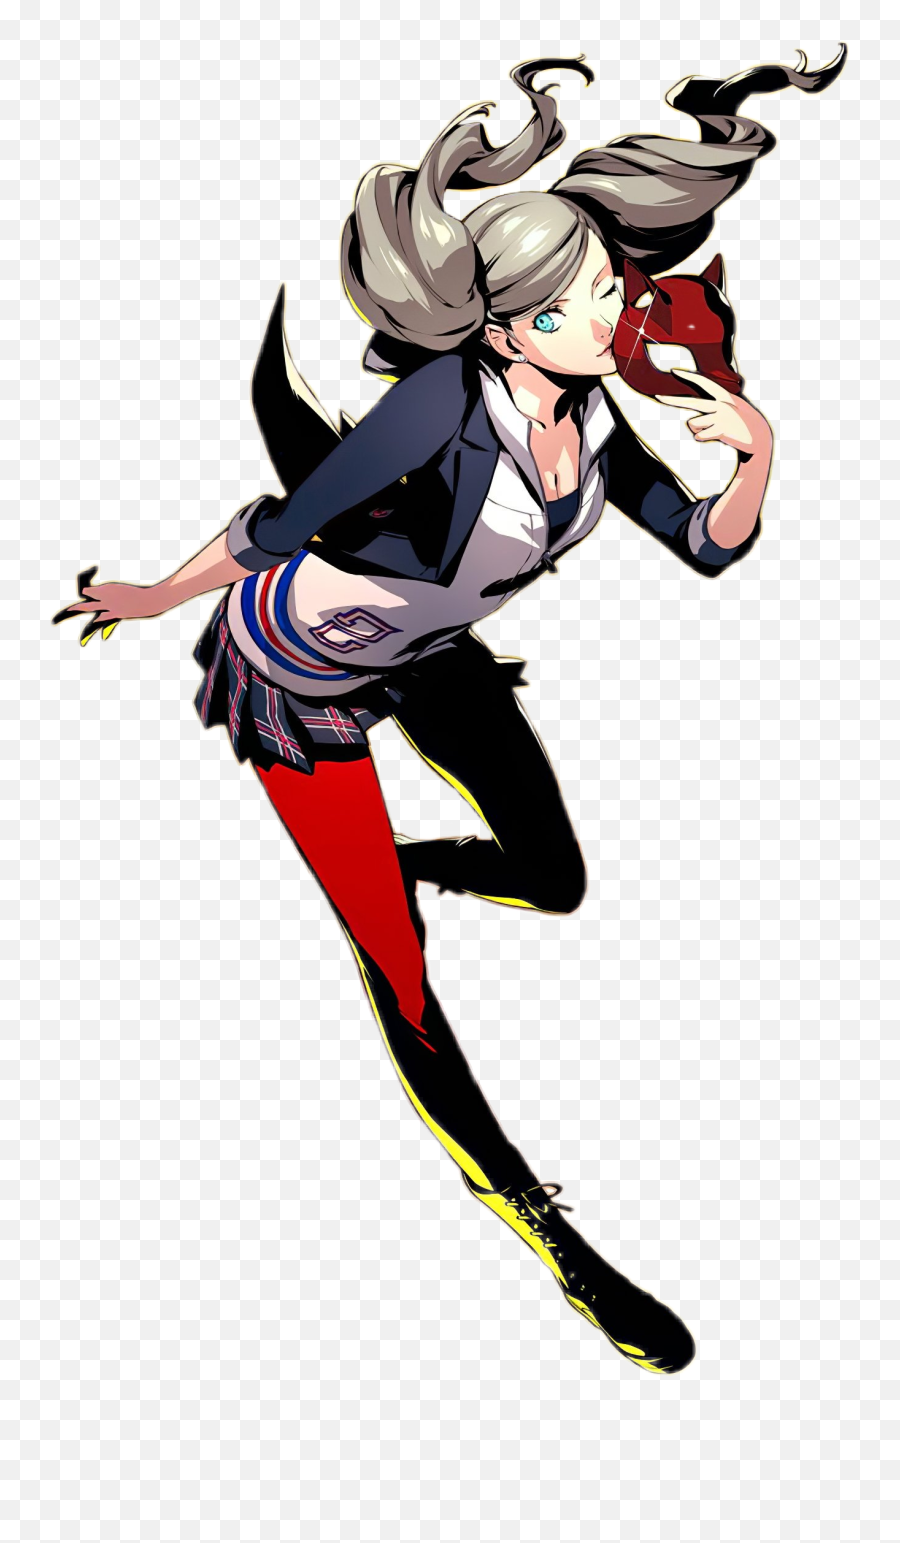 Takamaki Anne - Shin Megami Tensei Persona 5 Image Ann Takamaki Persona 5 Royal Png,Persona 5 Png